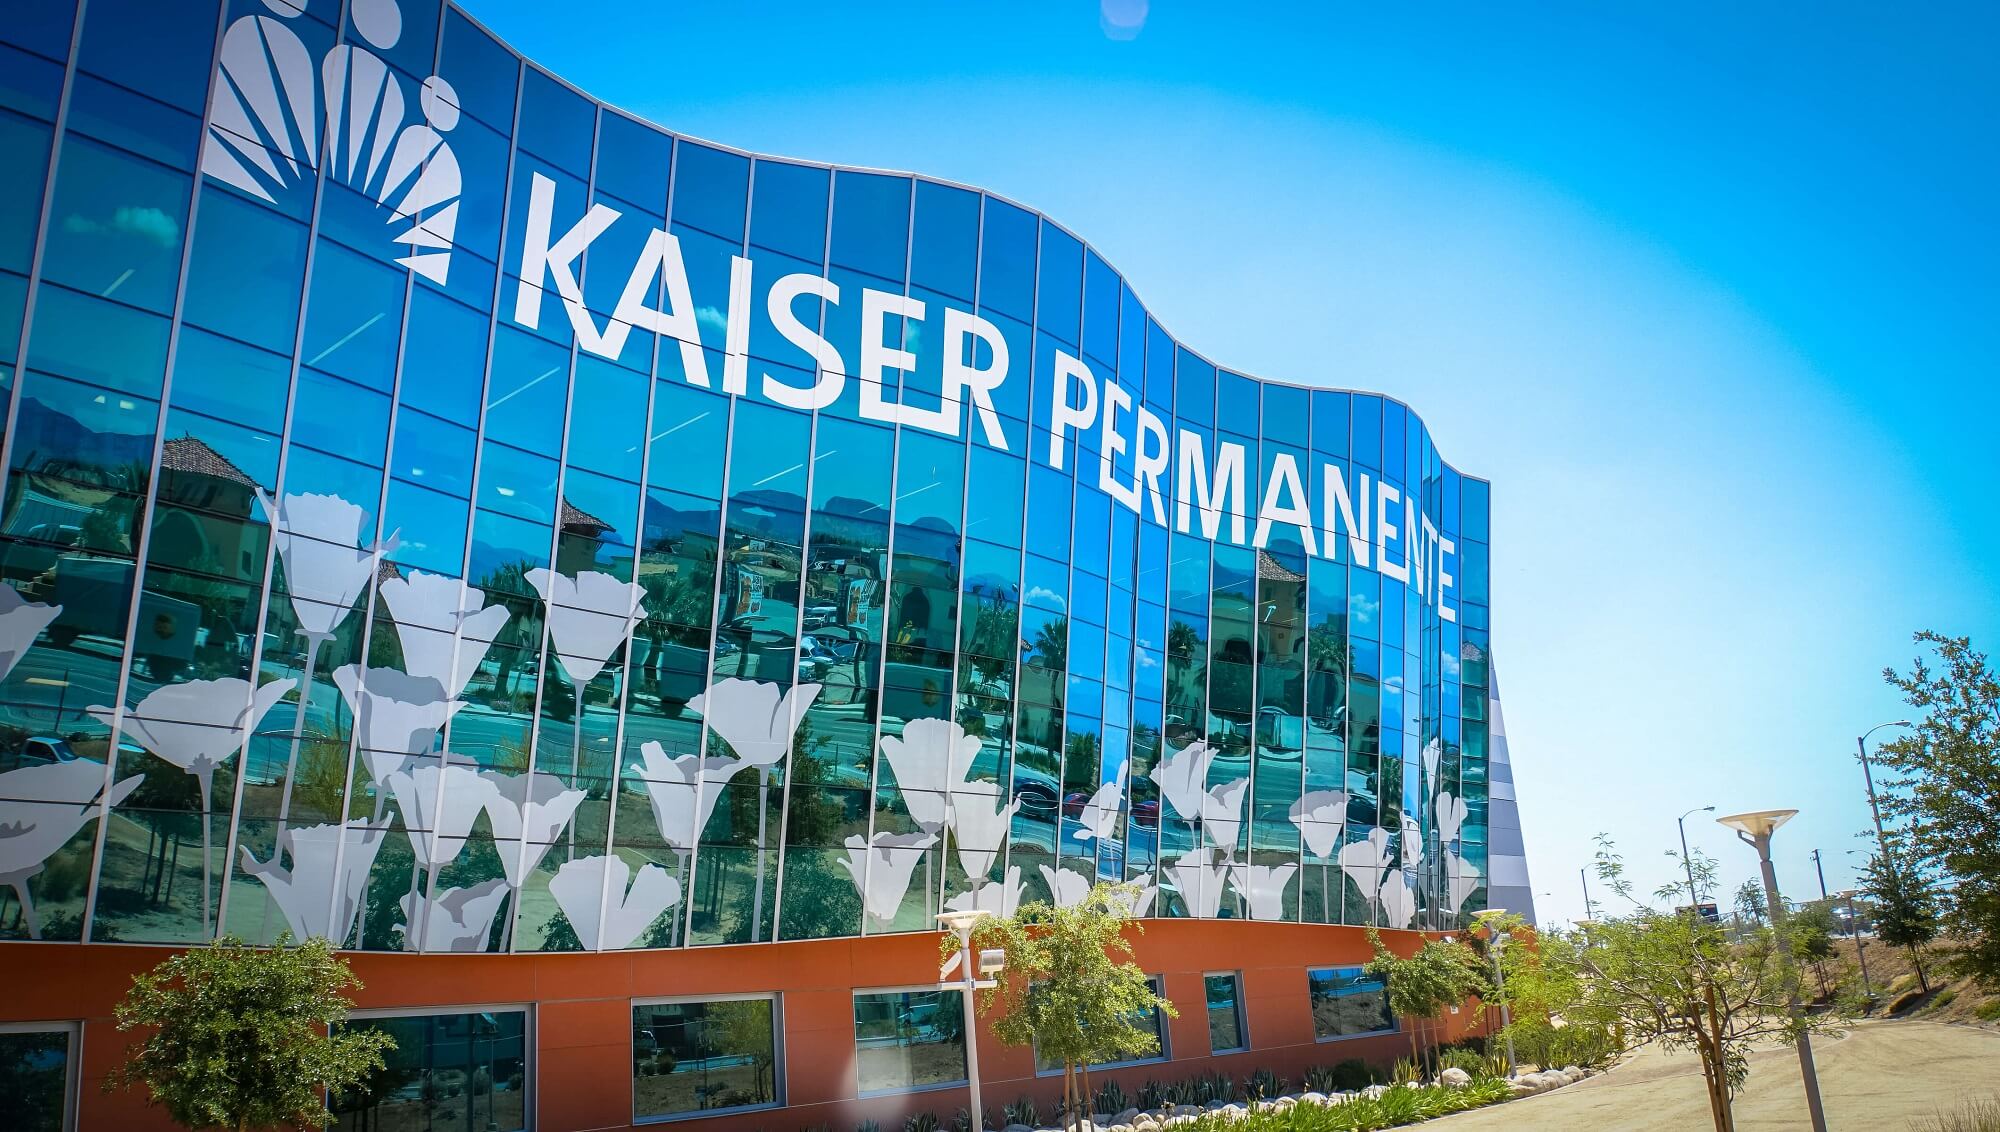 kaiser permanente official website